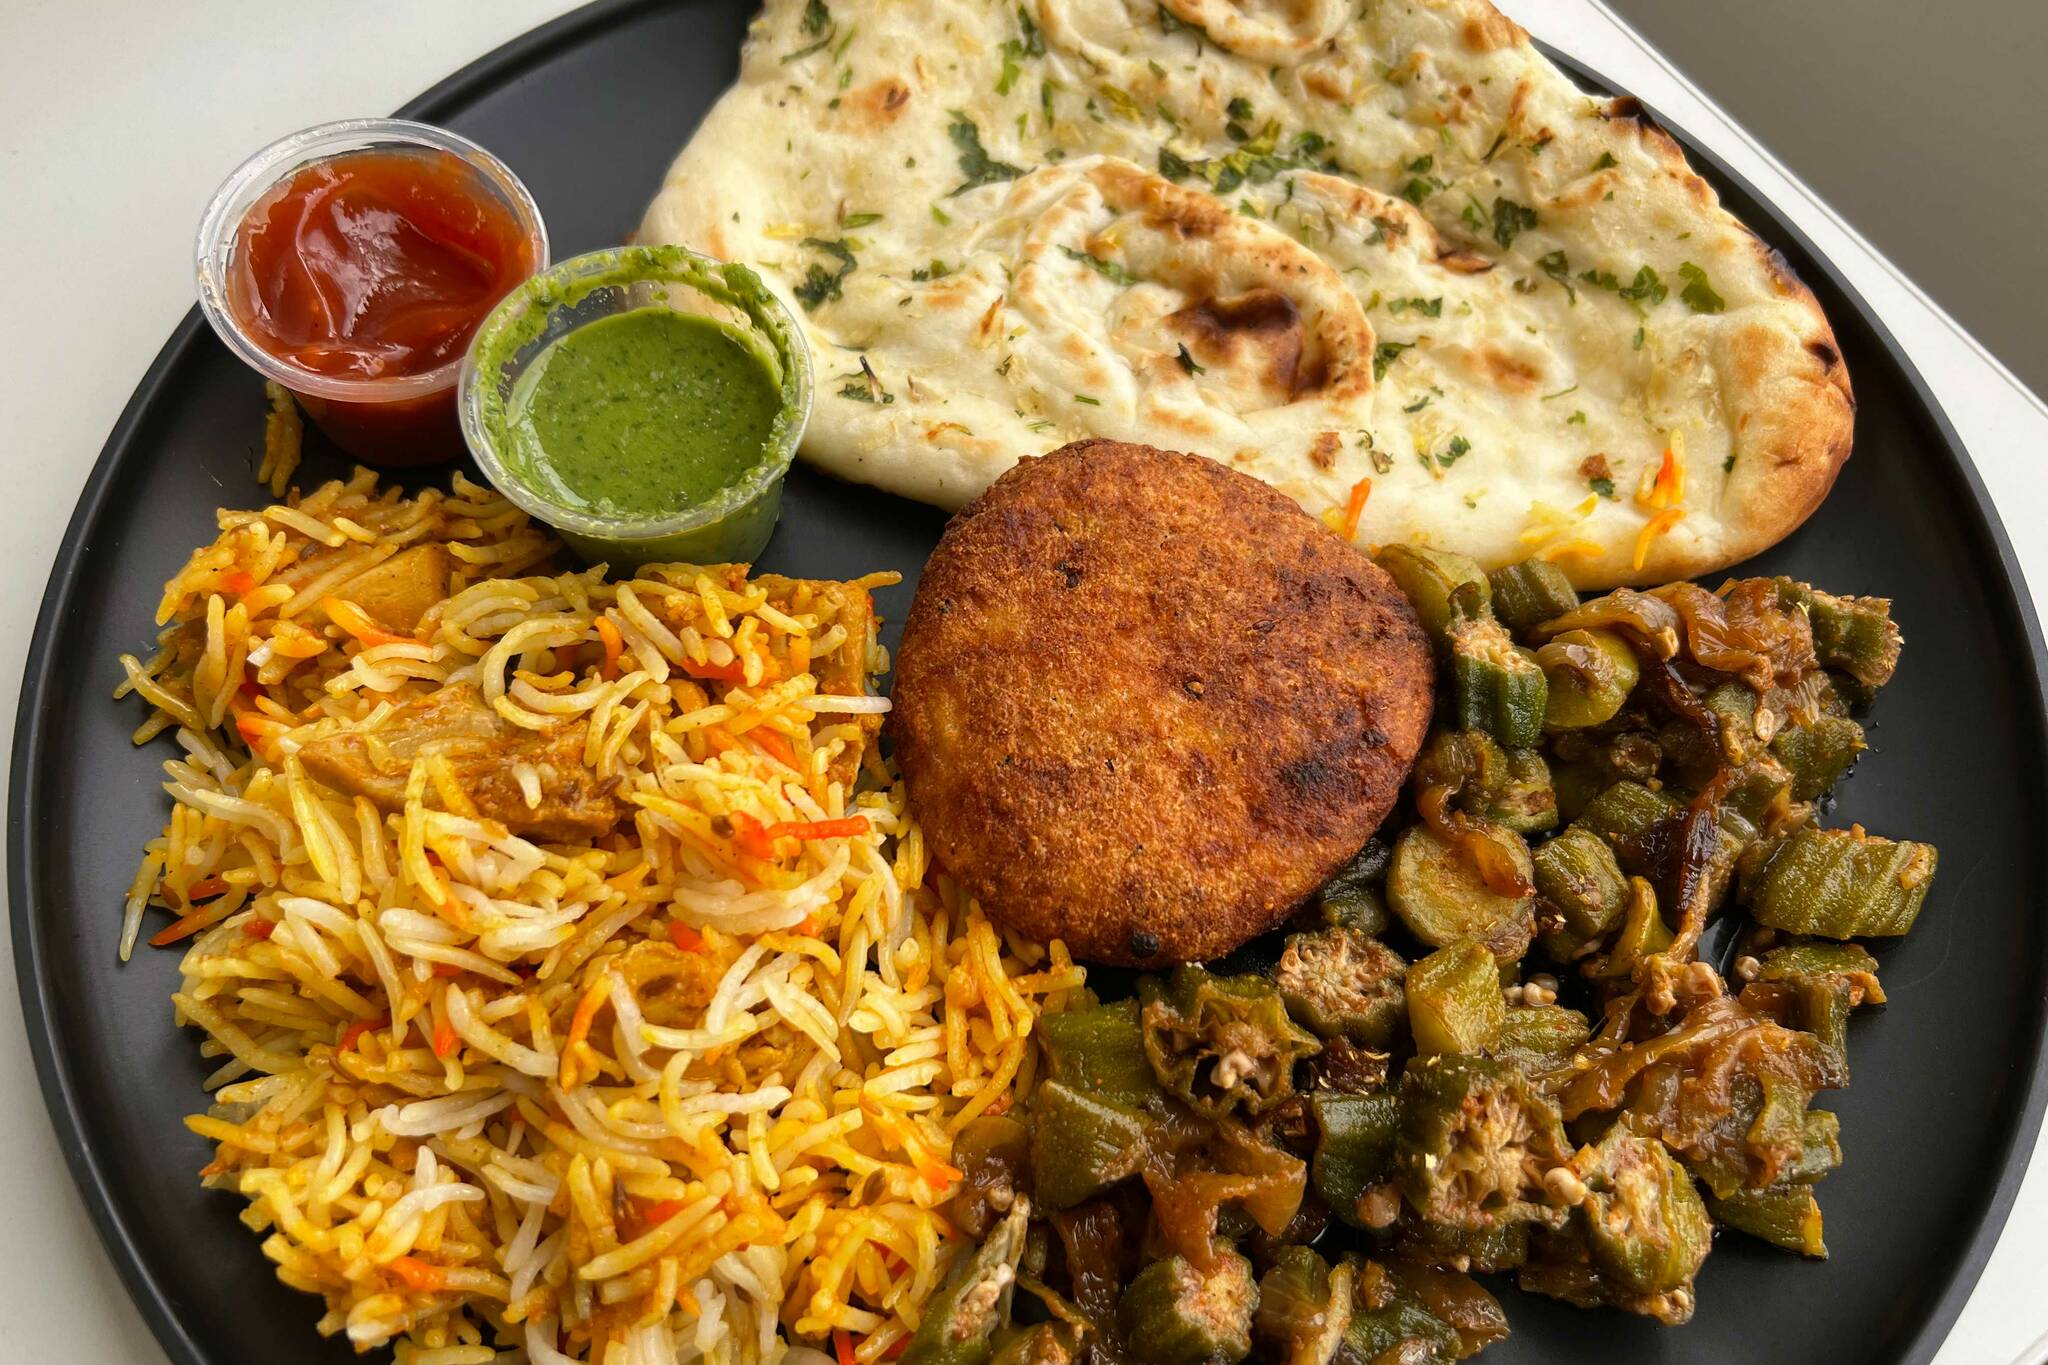 Garlic Naan, Paneer Kebab, Biryani Chicken and Bhindi Masala from Rice-N-Curry (Photo by Cameron Sheppard/Sound Publishing)